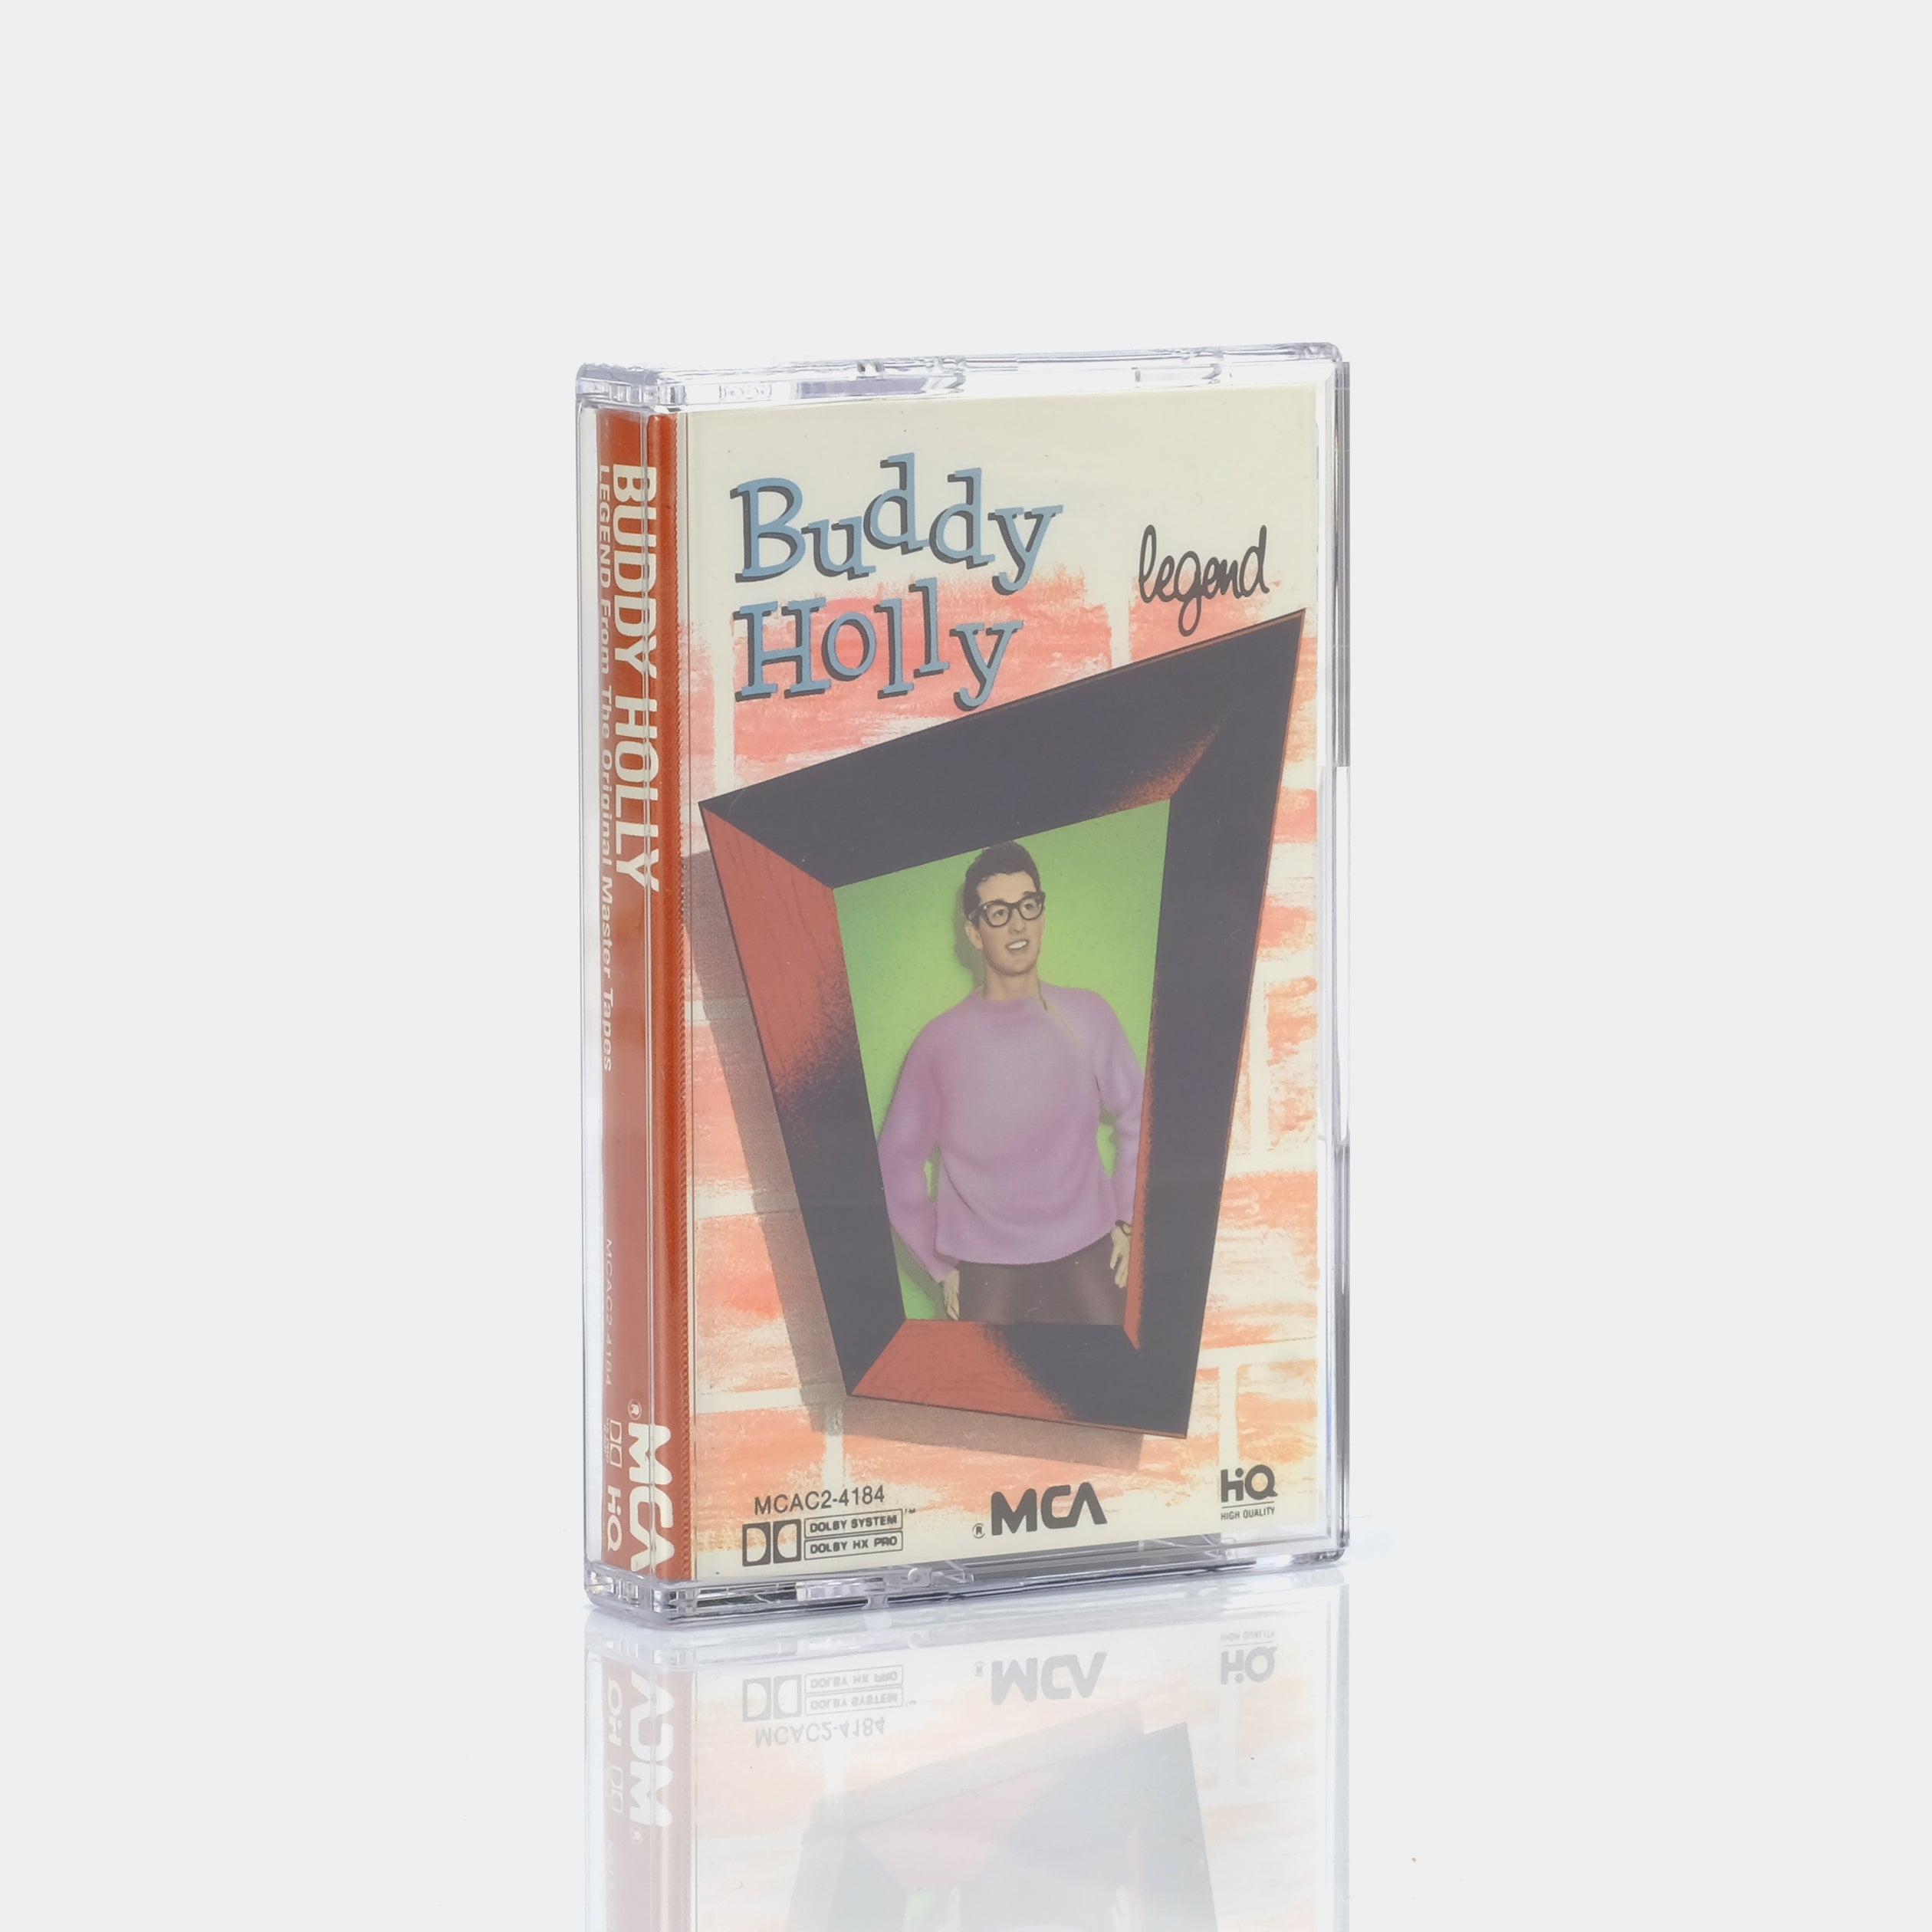 Buddy Holly - Legend Cassette Tape